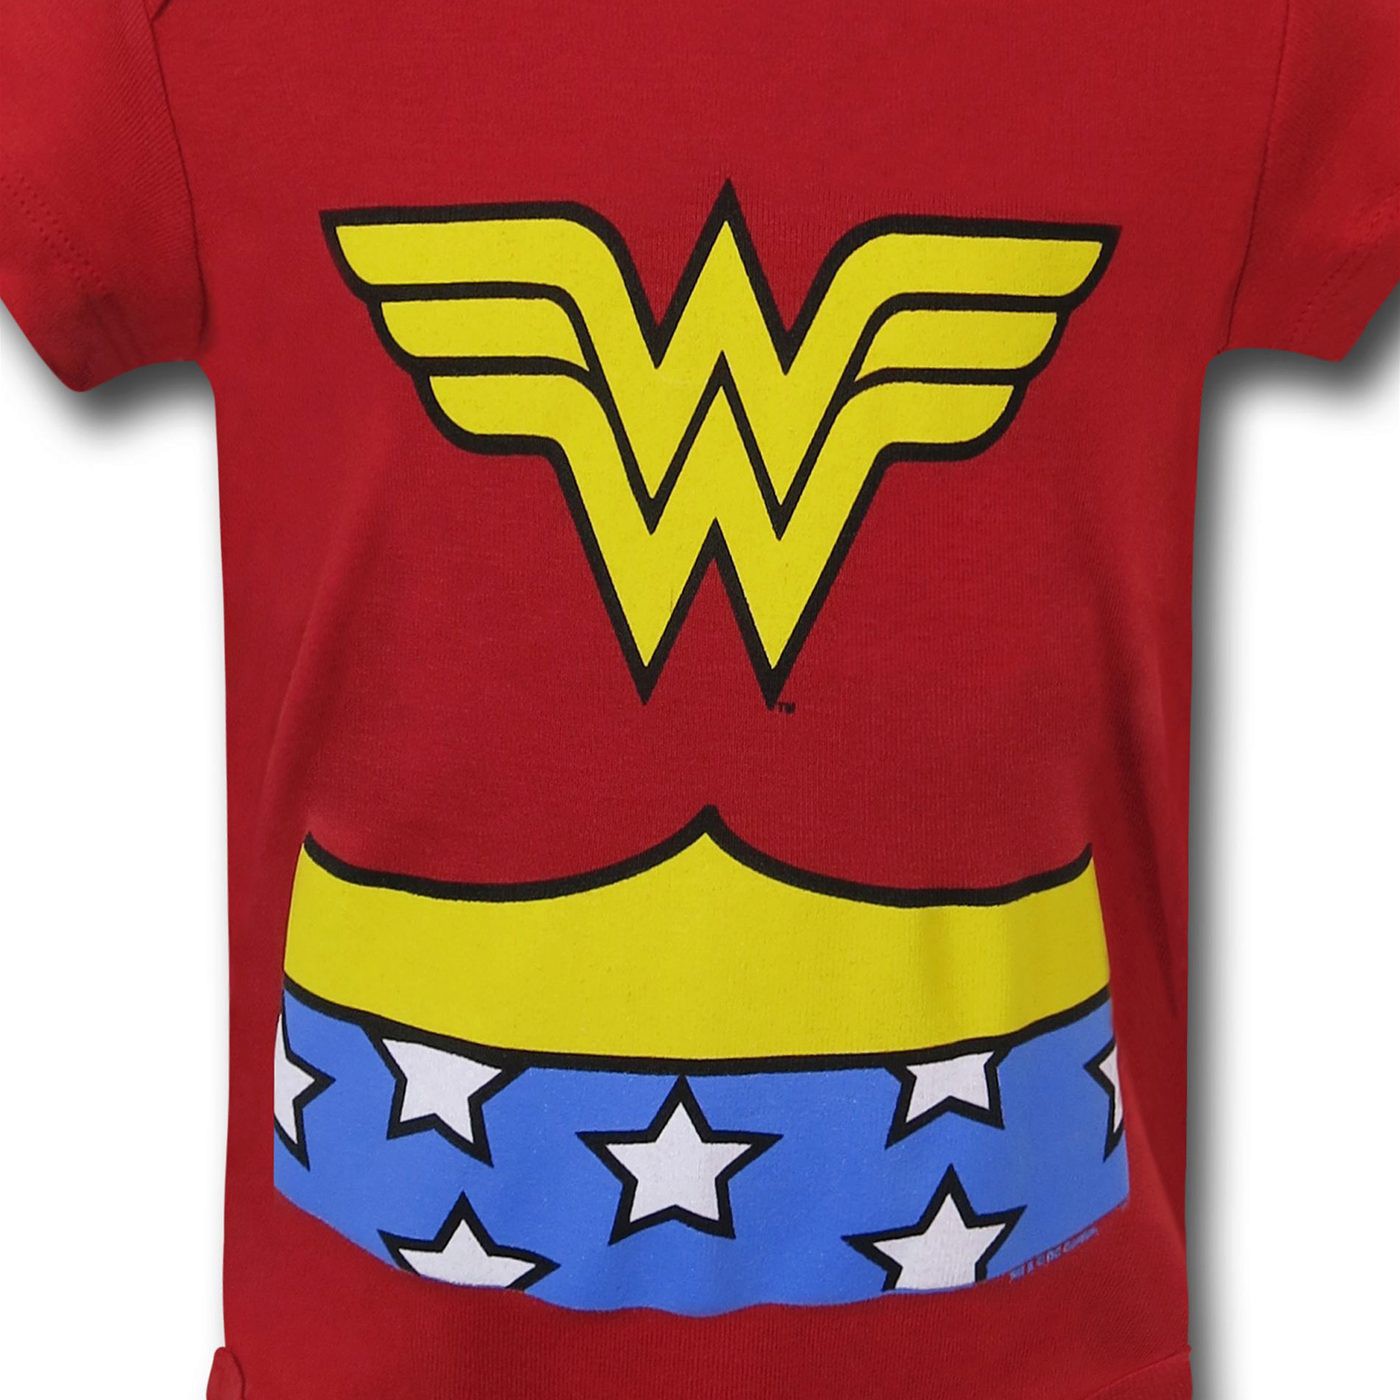 Wonder Woman Classic Costume Infant Snapsuit